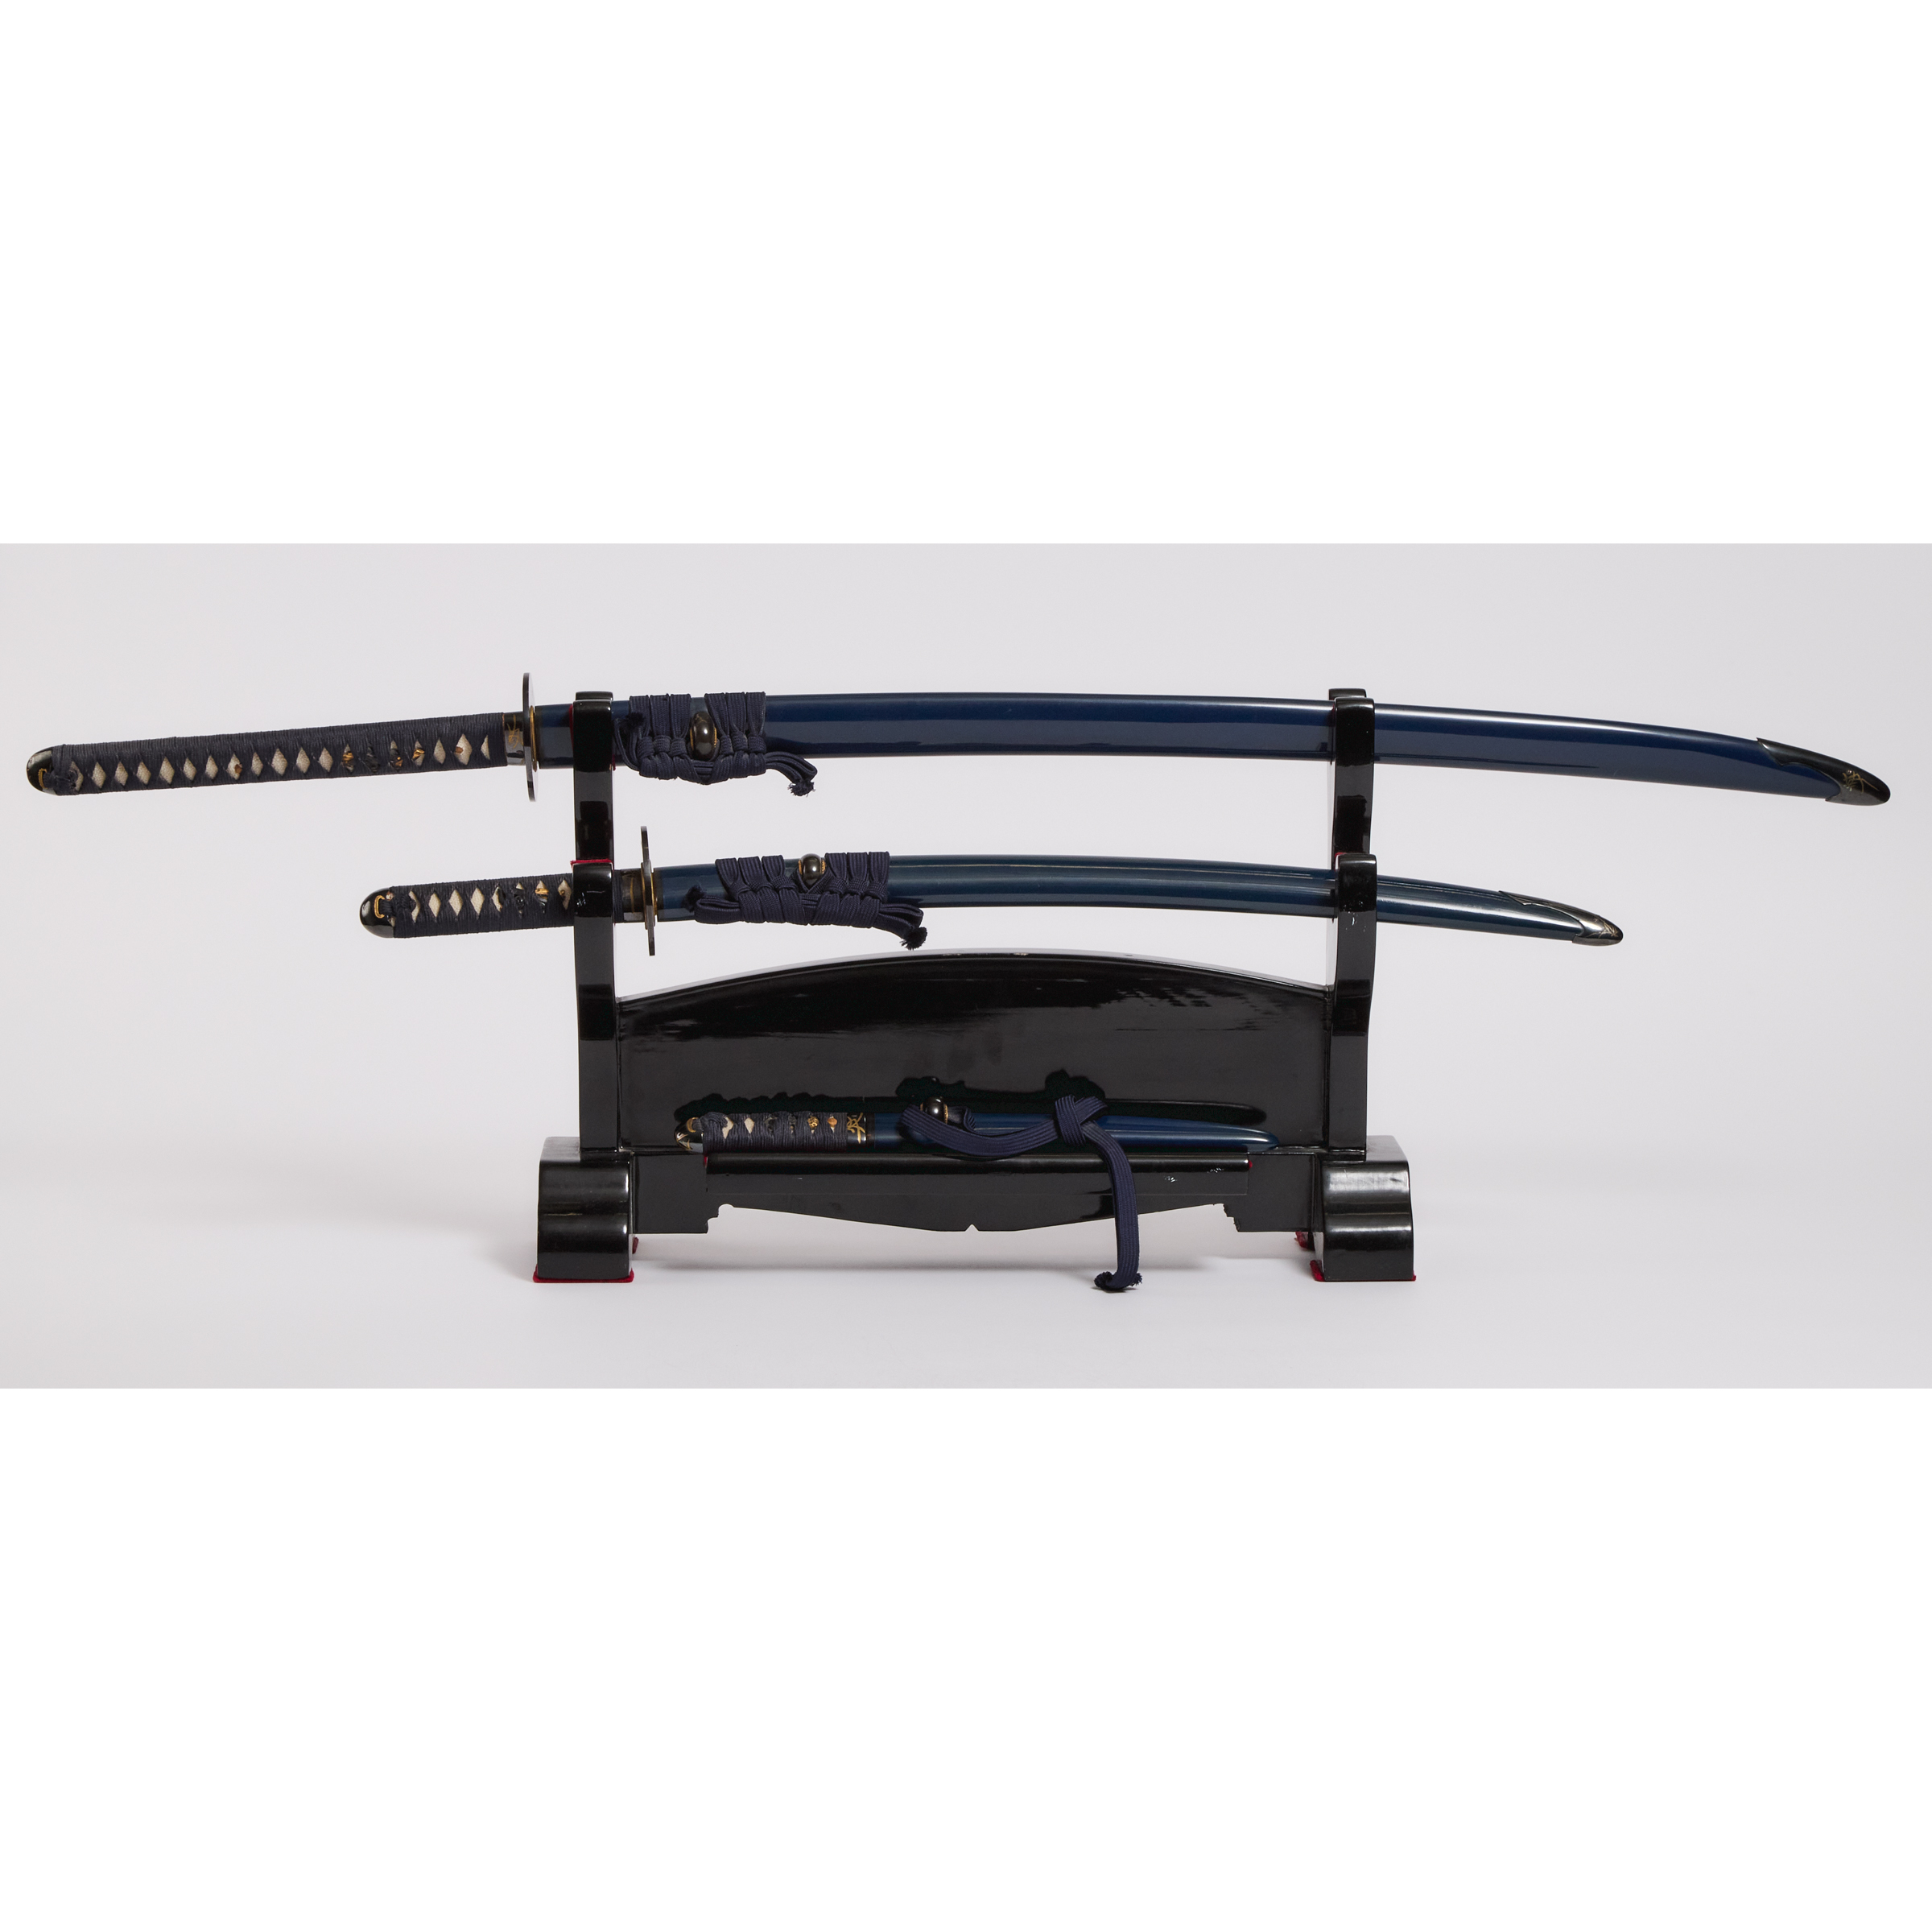 A Three Piece Japanese Sword Set 2fb05f0